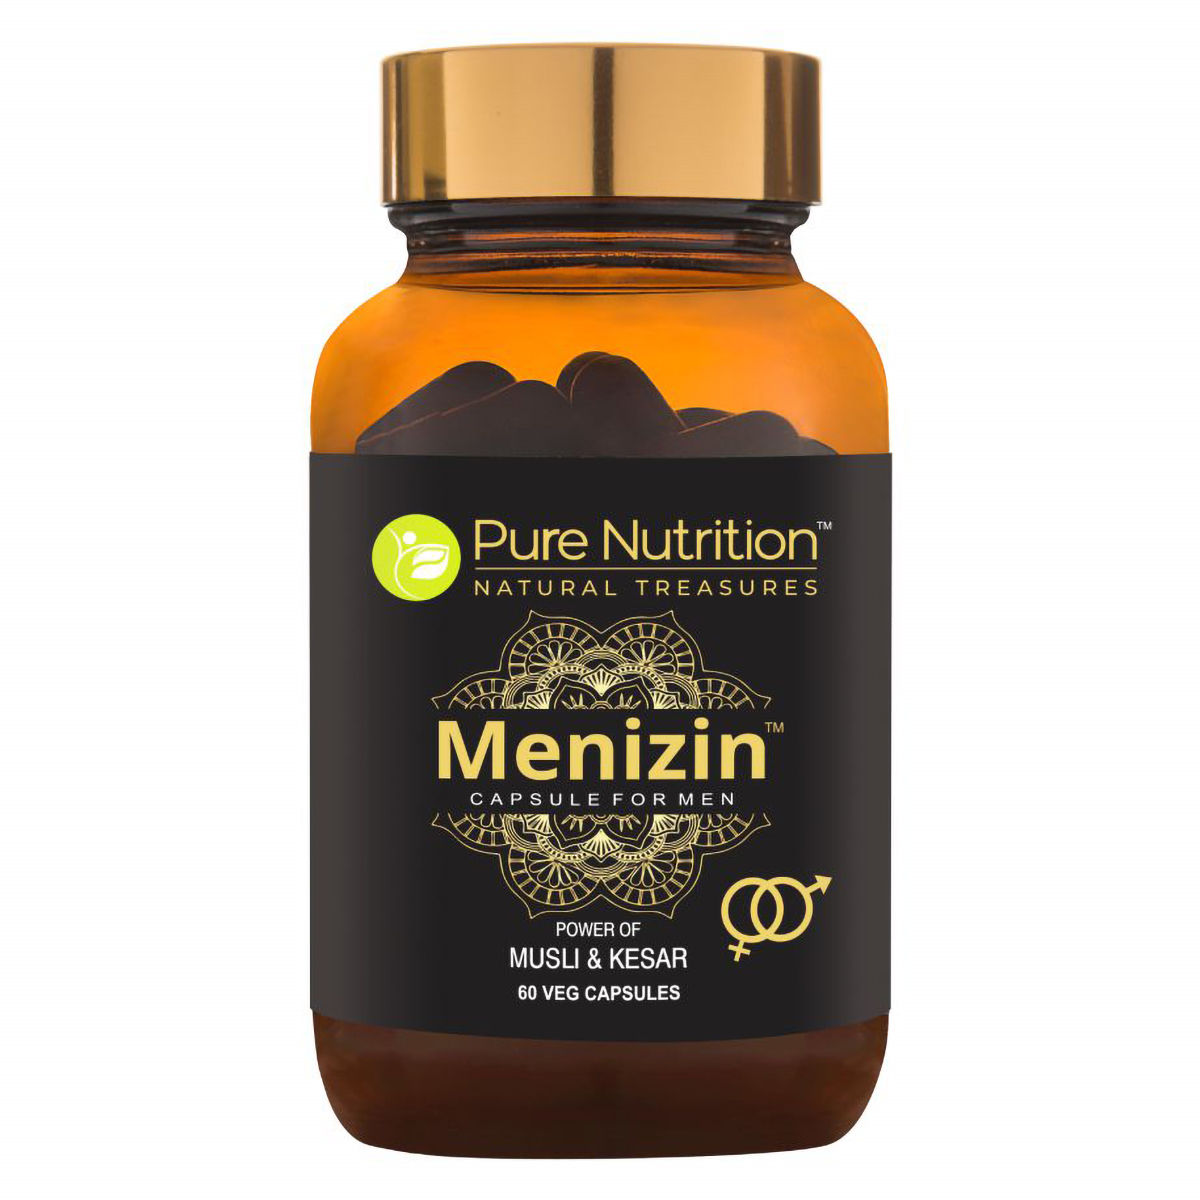 Buy Pure Nutrition Menizin Musli & Kesar, 60 Capsules Online